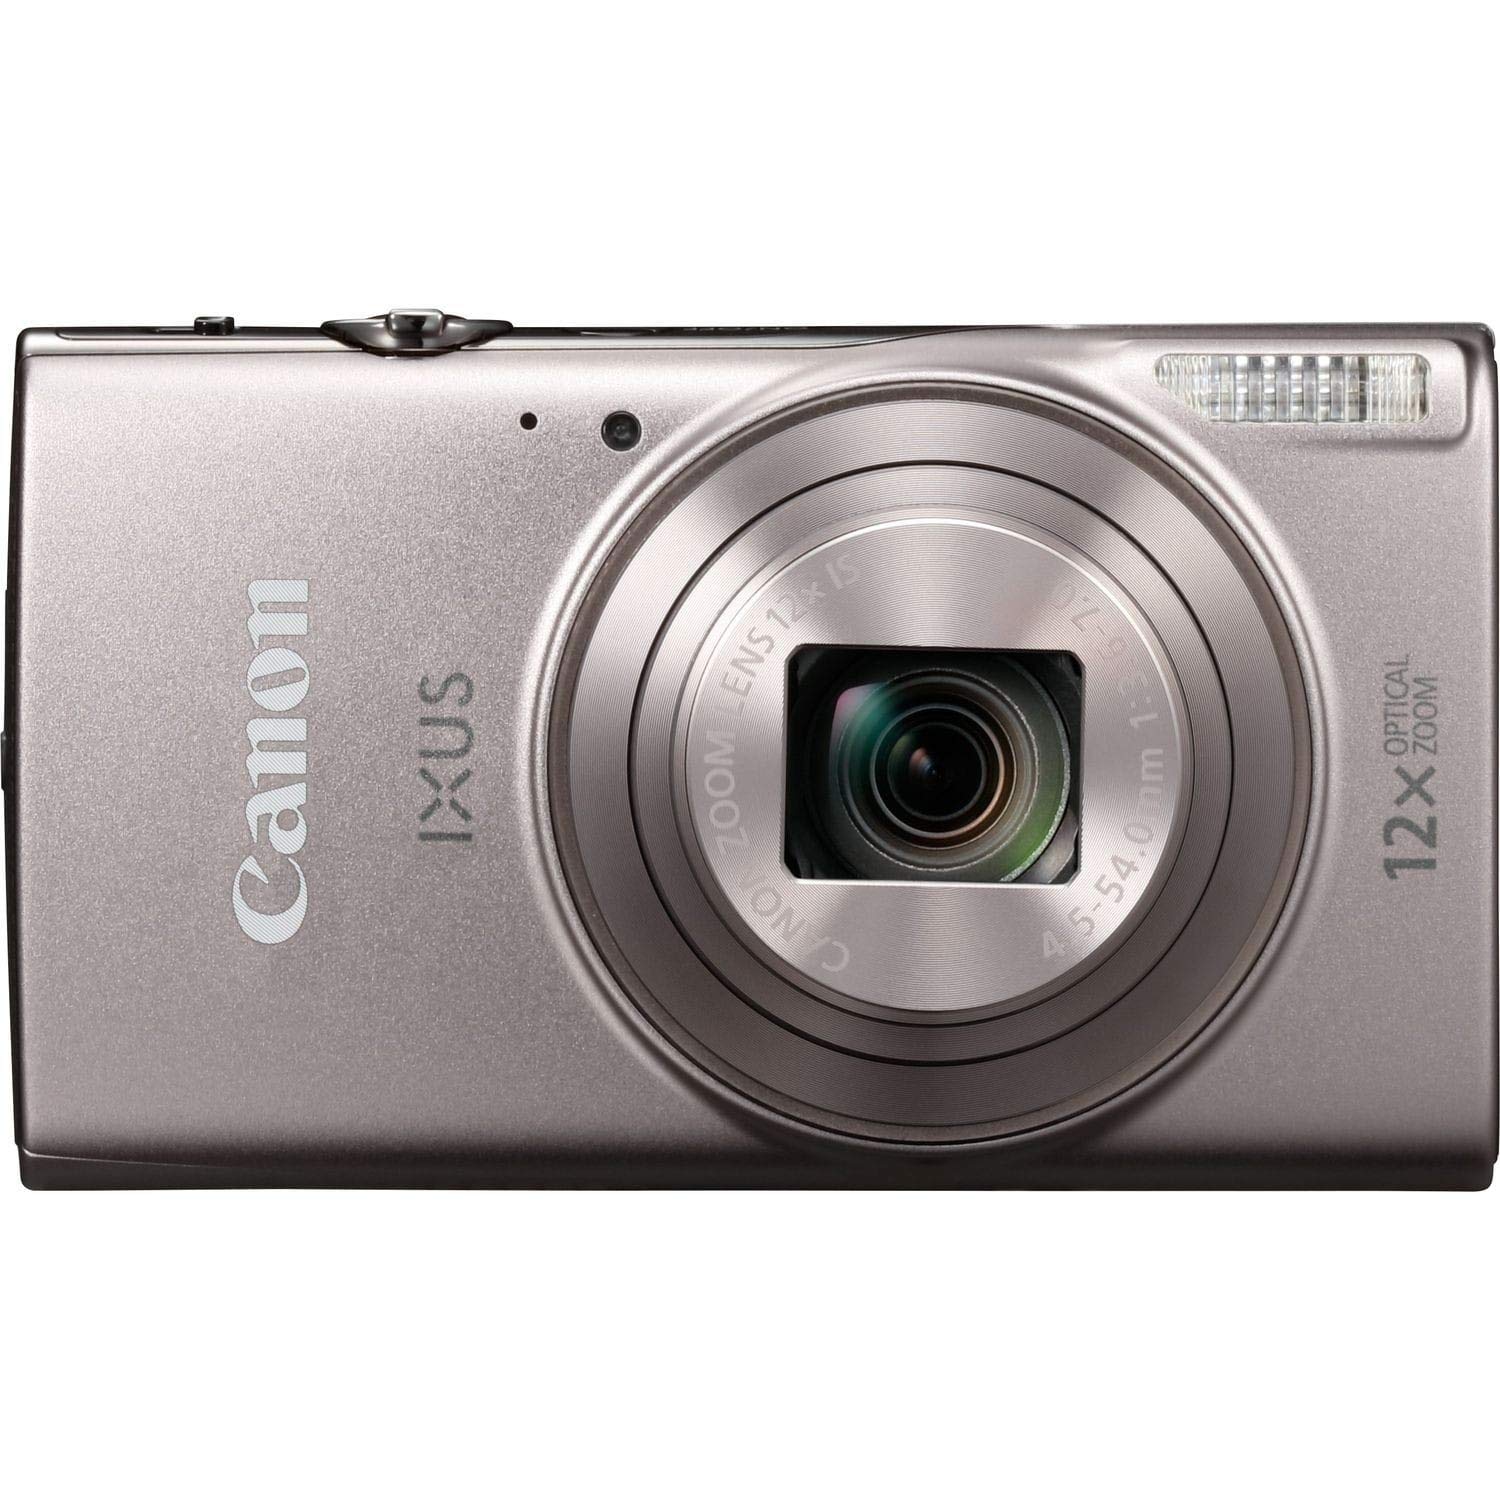 Canon Ixus 285 HS Silver, 1079C001 (International Model)